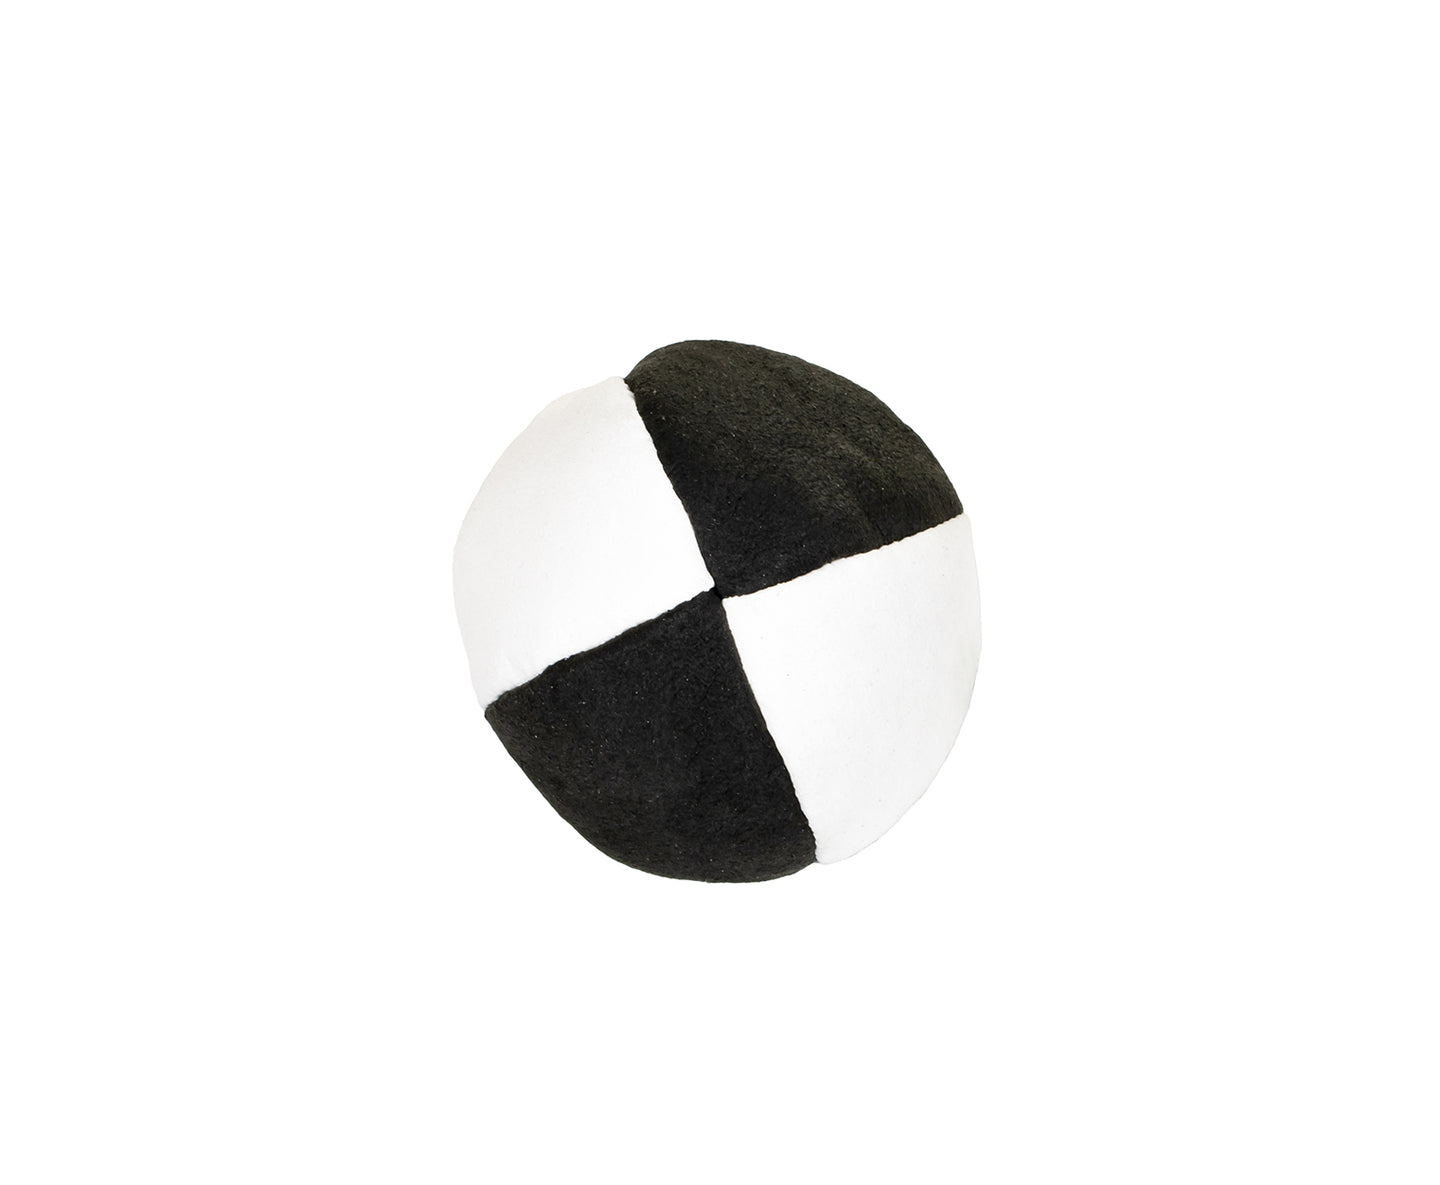 Juggle Dream Swag Bag - 70-gram Juggling Ball - white/ black colour